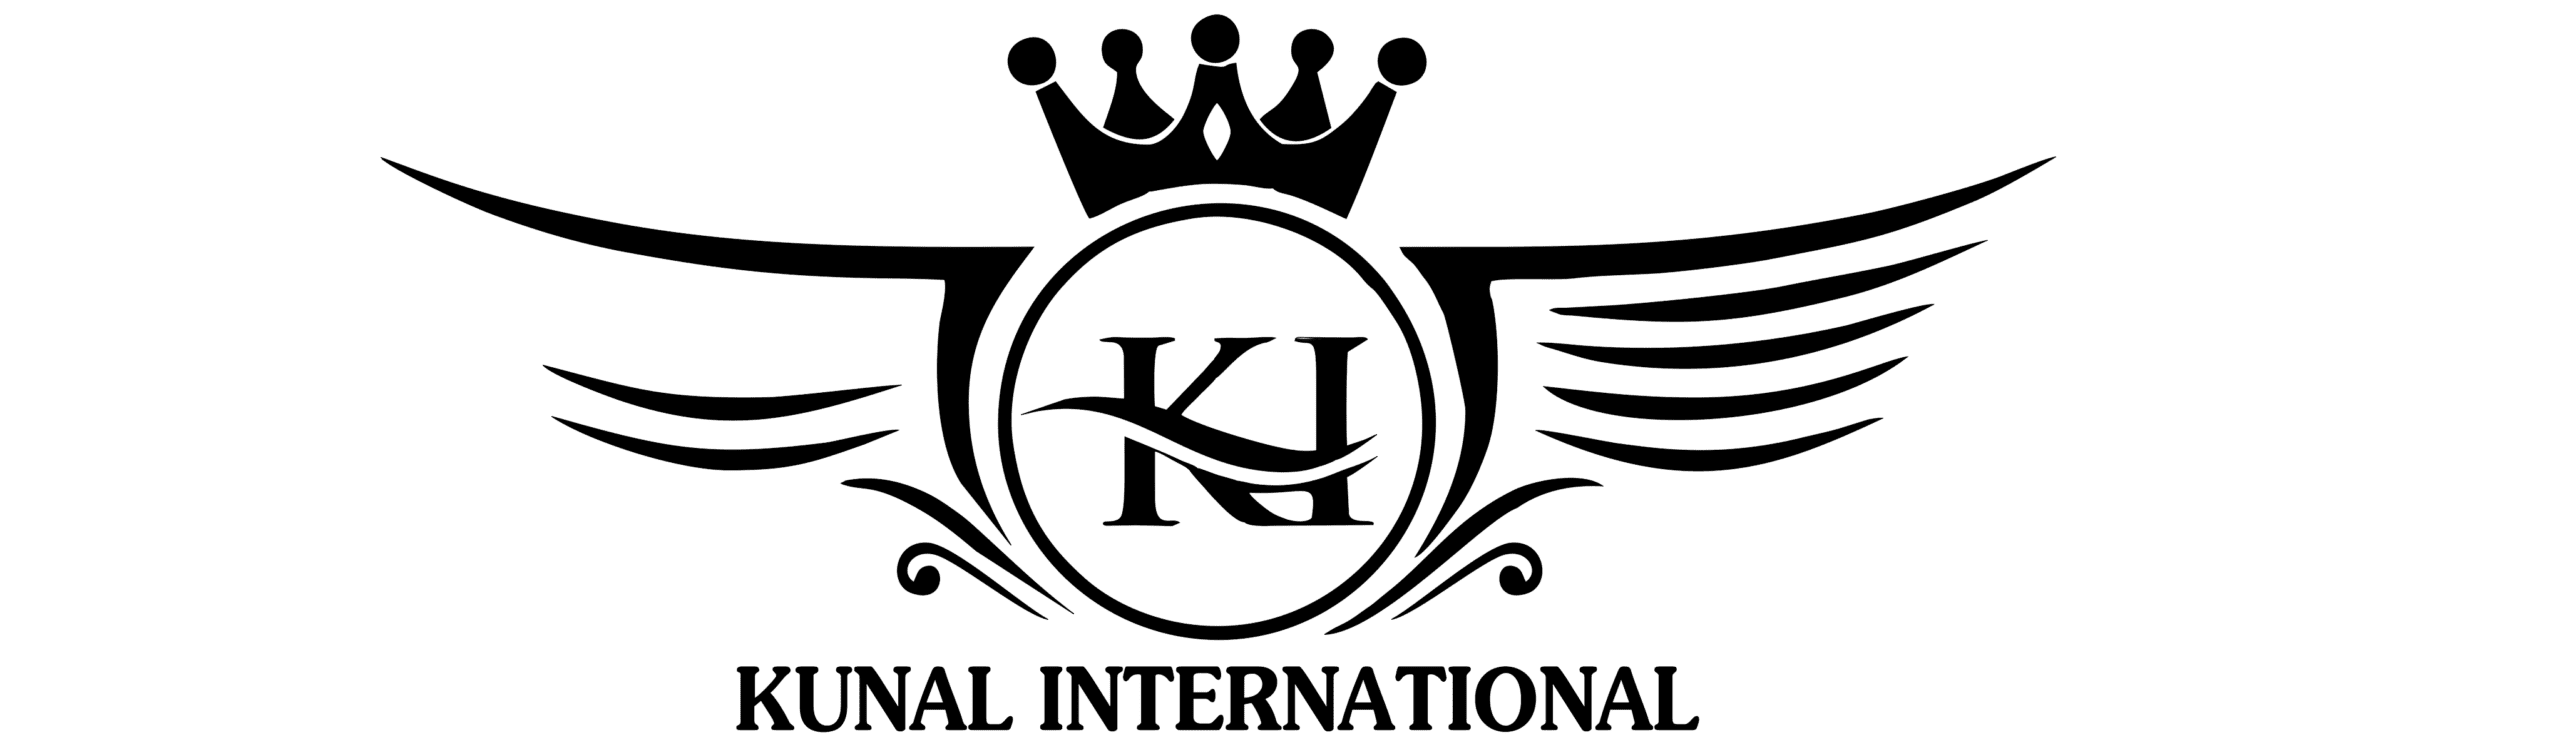 kunal international logo